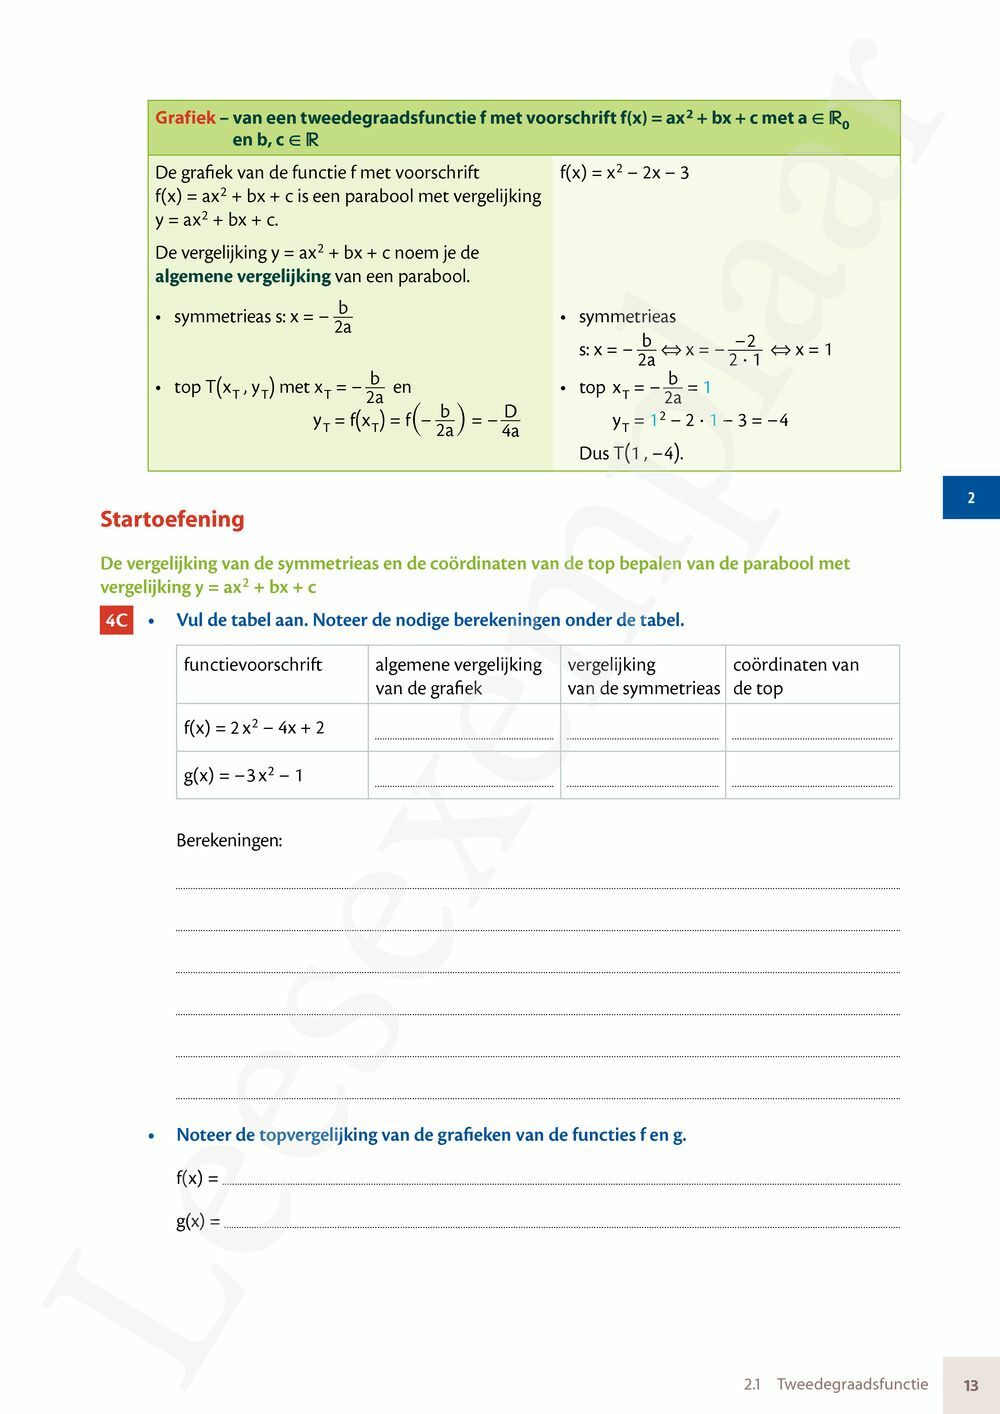 Preview: Matrix Wiskunde 5/6 Analyse, algebra Dubbele finaliteit Leerwerkboek (incl. Pelckmans Portaal)